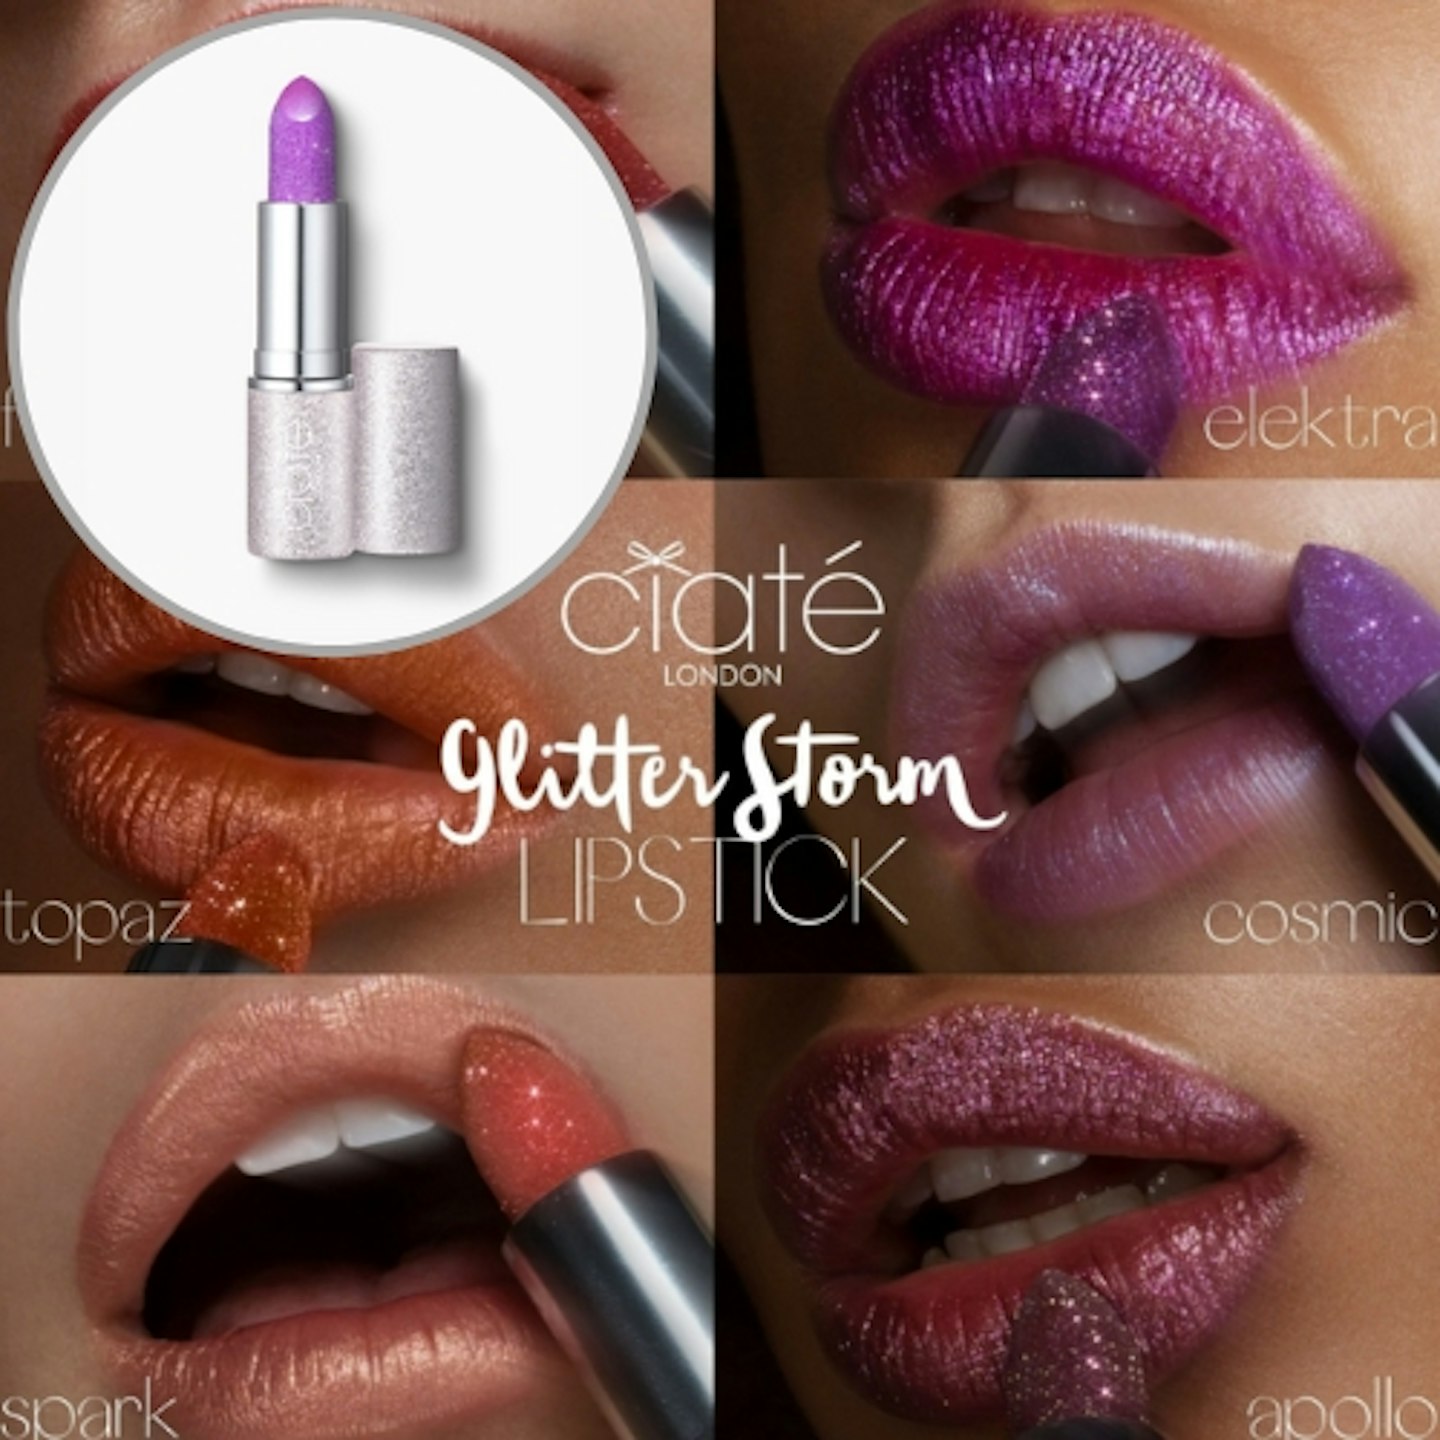 Ciaté London Glitter Storm Lipstick in Cosmic/Elektra